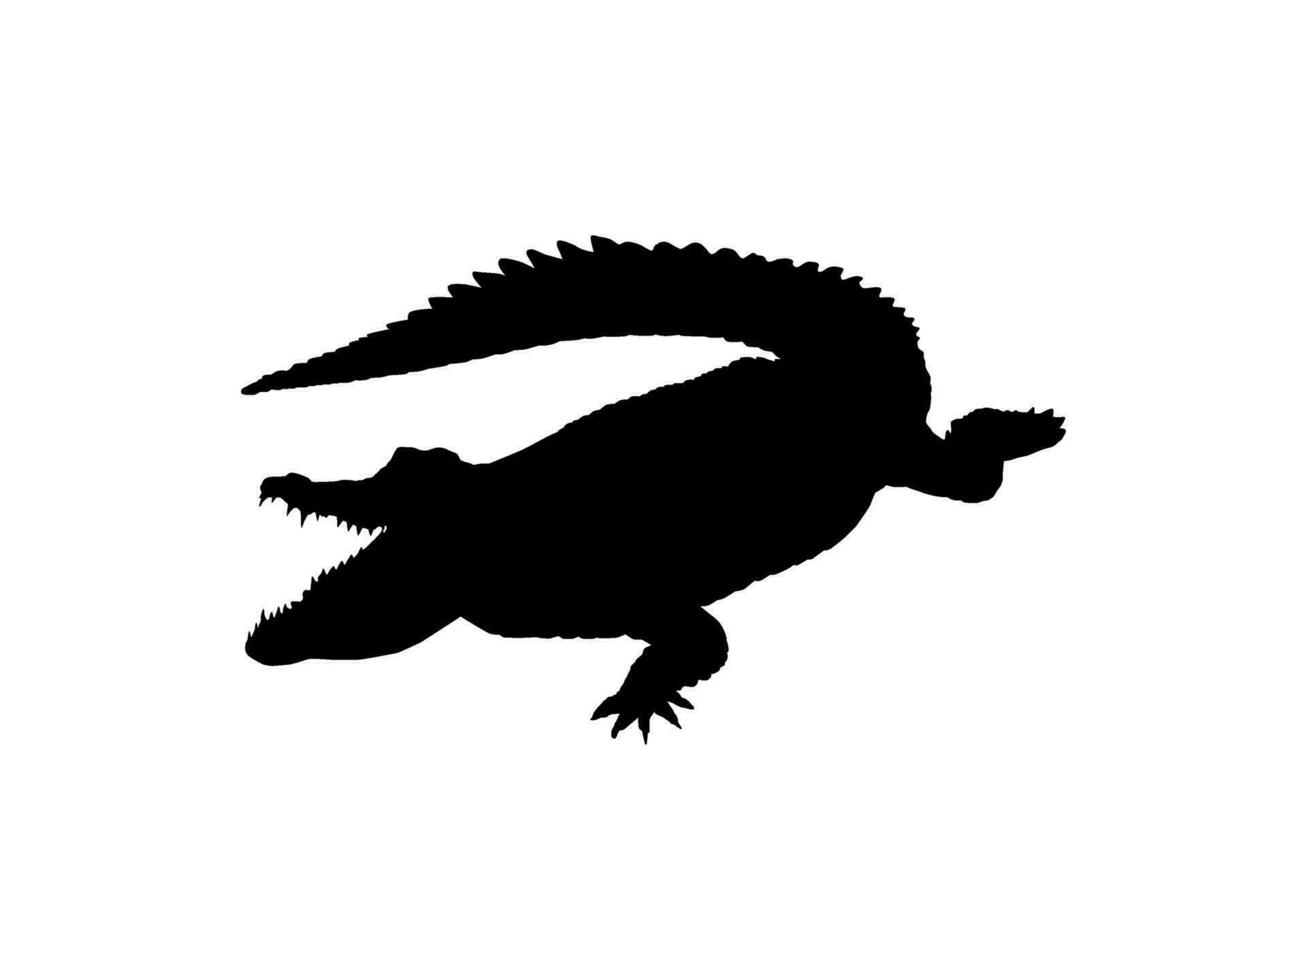 Crocodile or Alligator Silhouette for Art Illustration, Pictogram, Logo Type, Website or Graphic Design Element. Vector Illustration